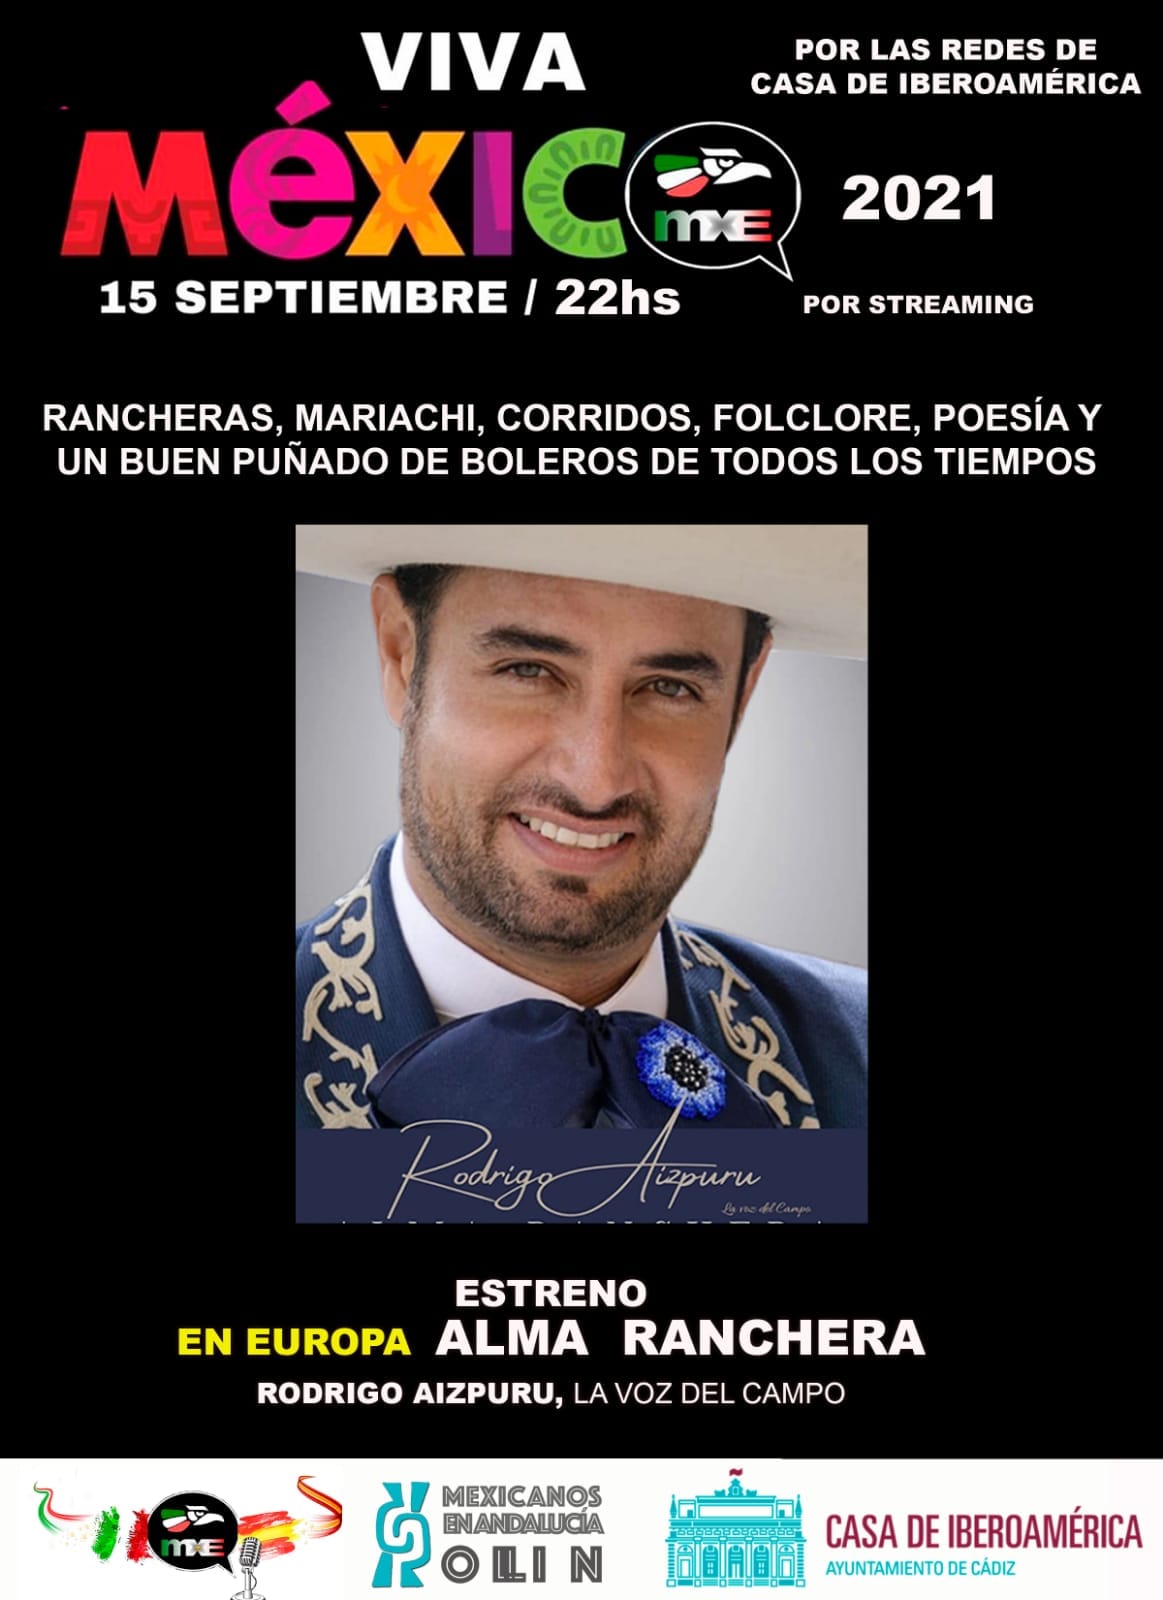 Rodrigo Aizpuru ya suena con “Alma Ranchera” en España